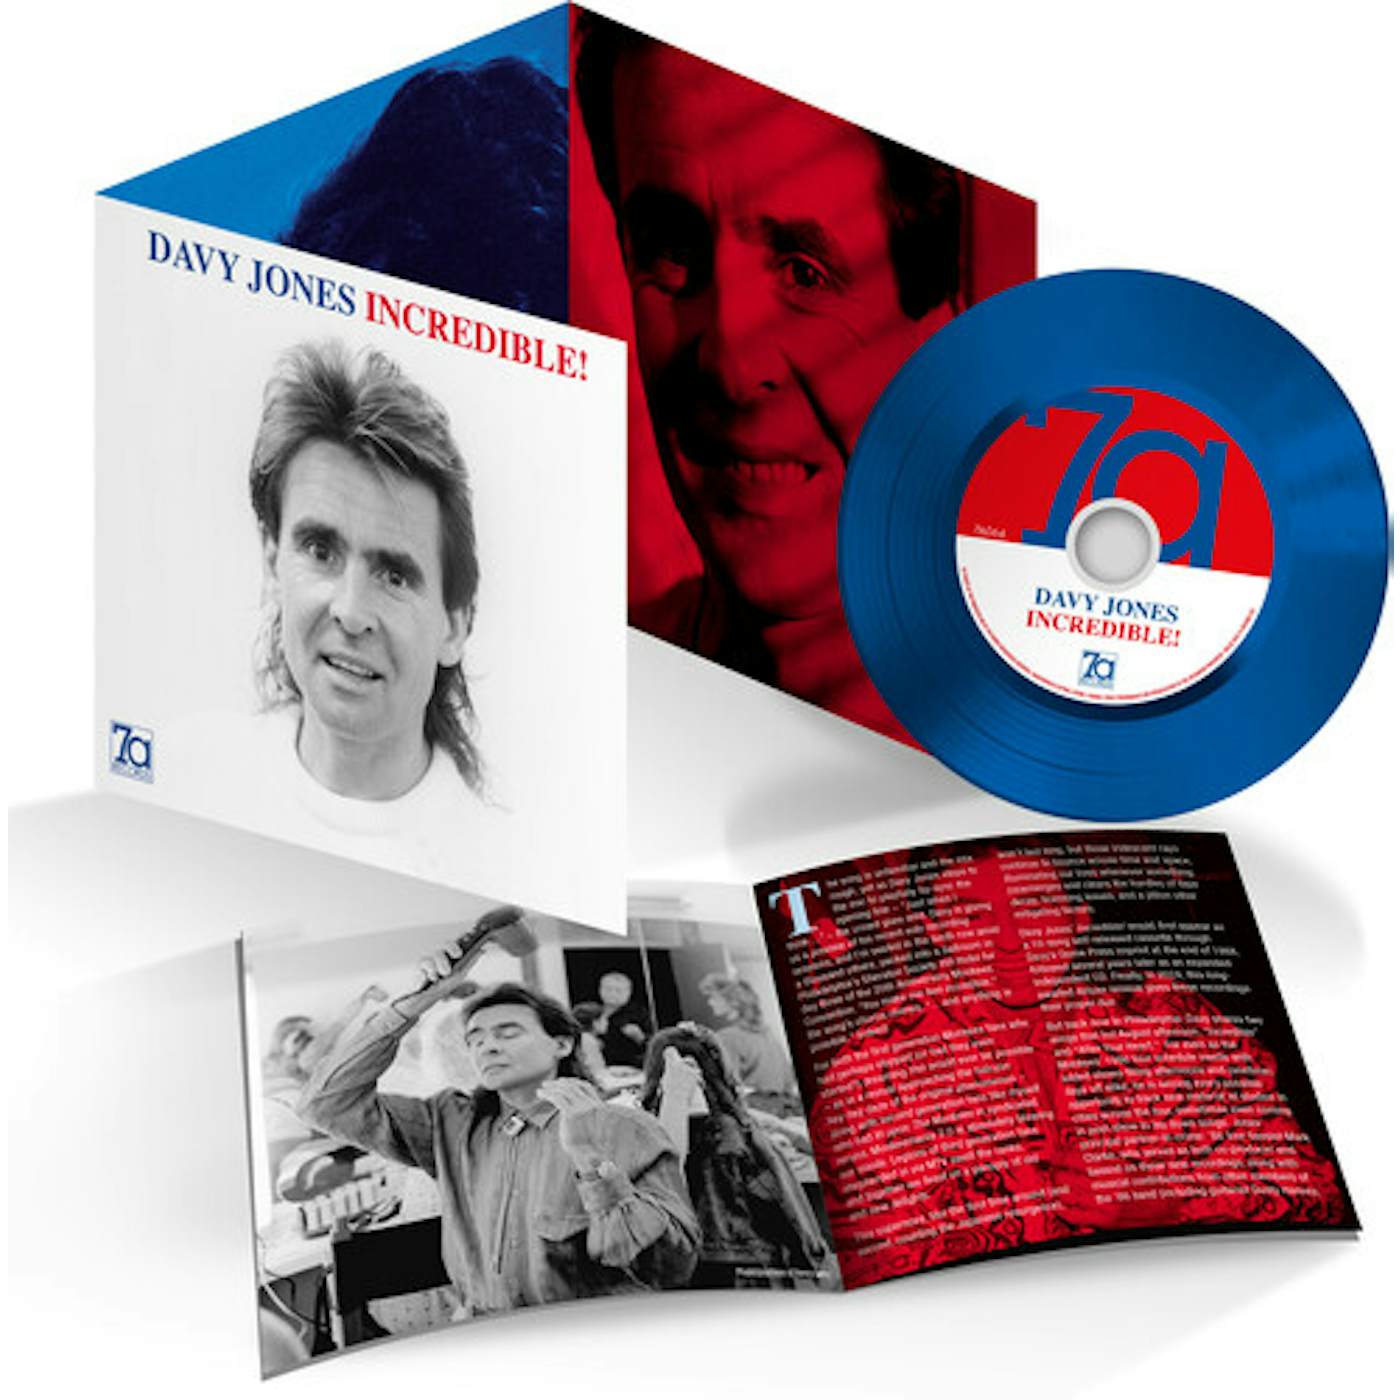 Davy Jones INCREDIBLE CD